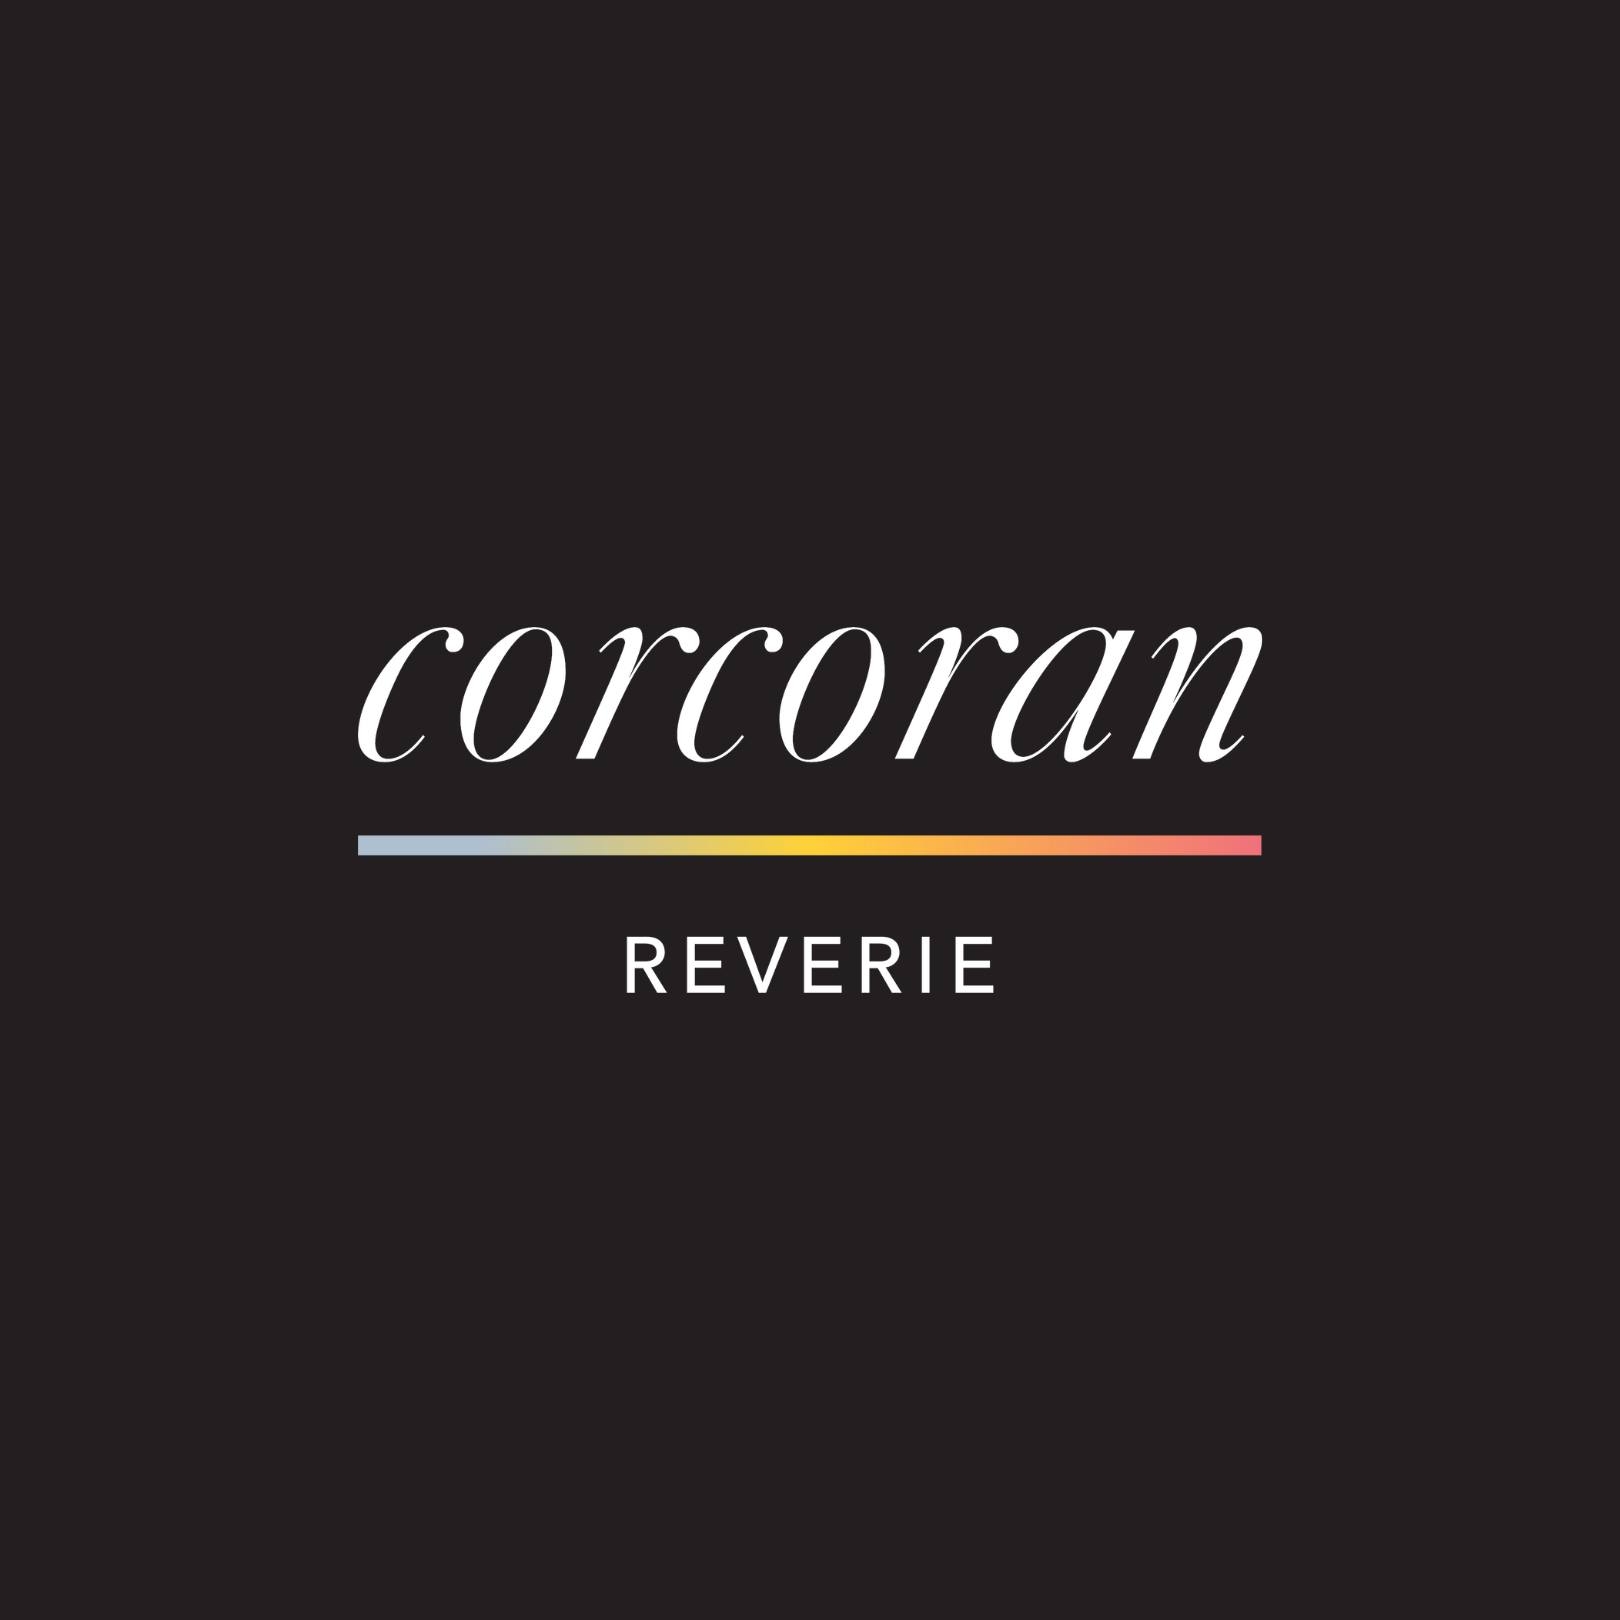 Corcoran Reverie logo